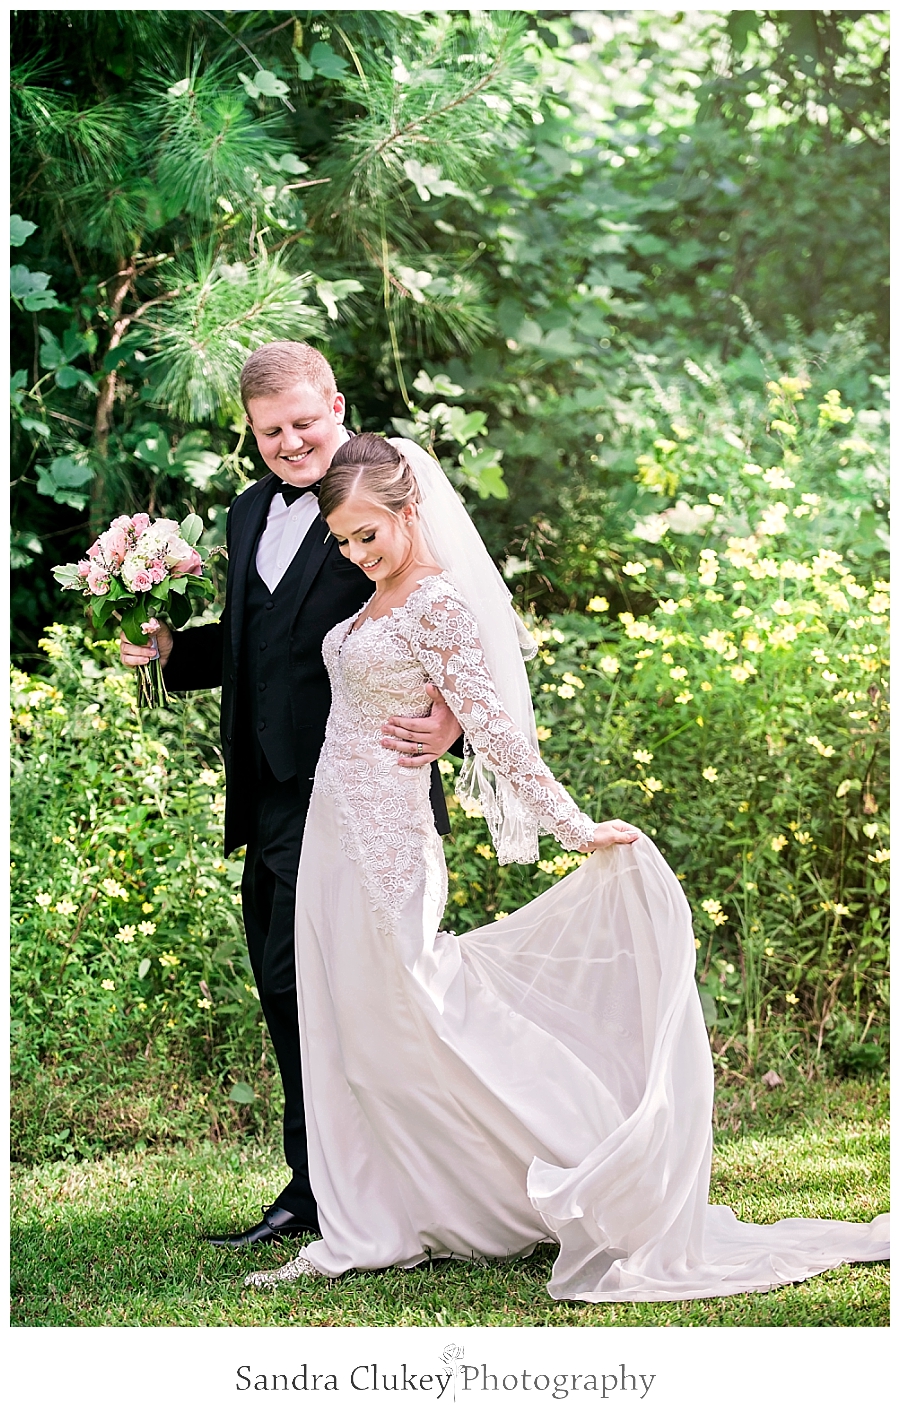  Bride and groom walking in Fletcher Park, Cleveland TN.  Copyright Sandra Clukey Photography, LLC  https://www.sandraclukeyphotography.com/ 